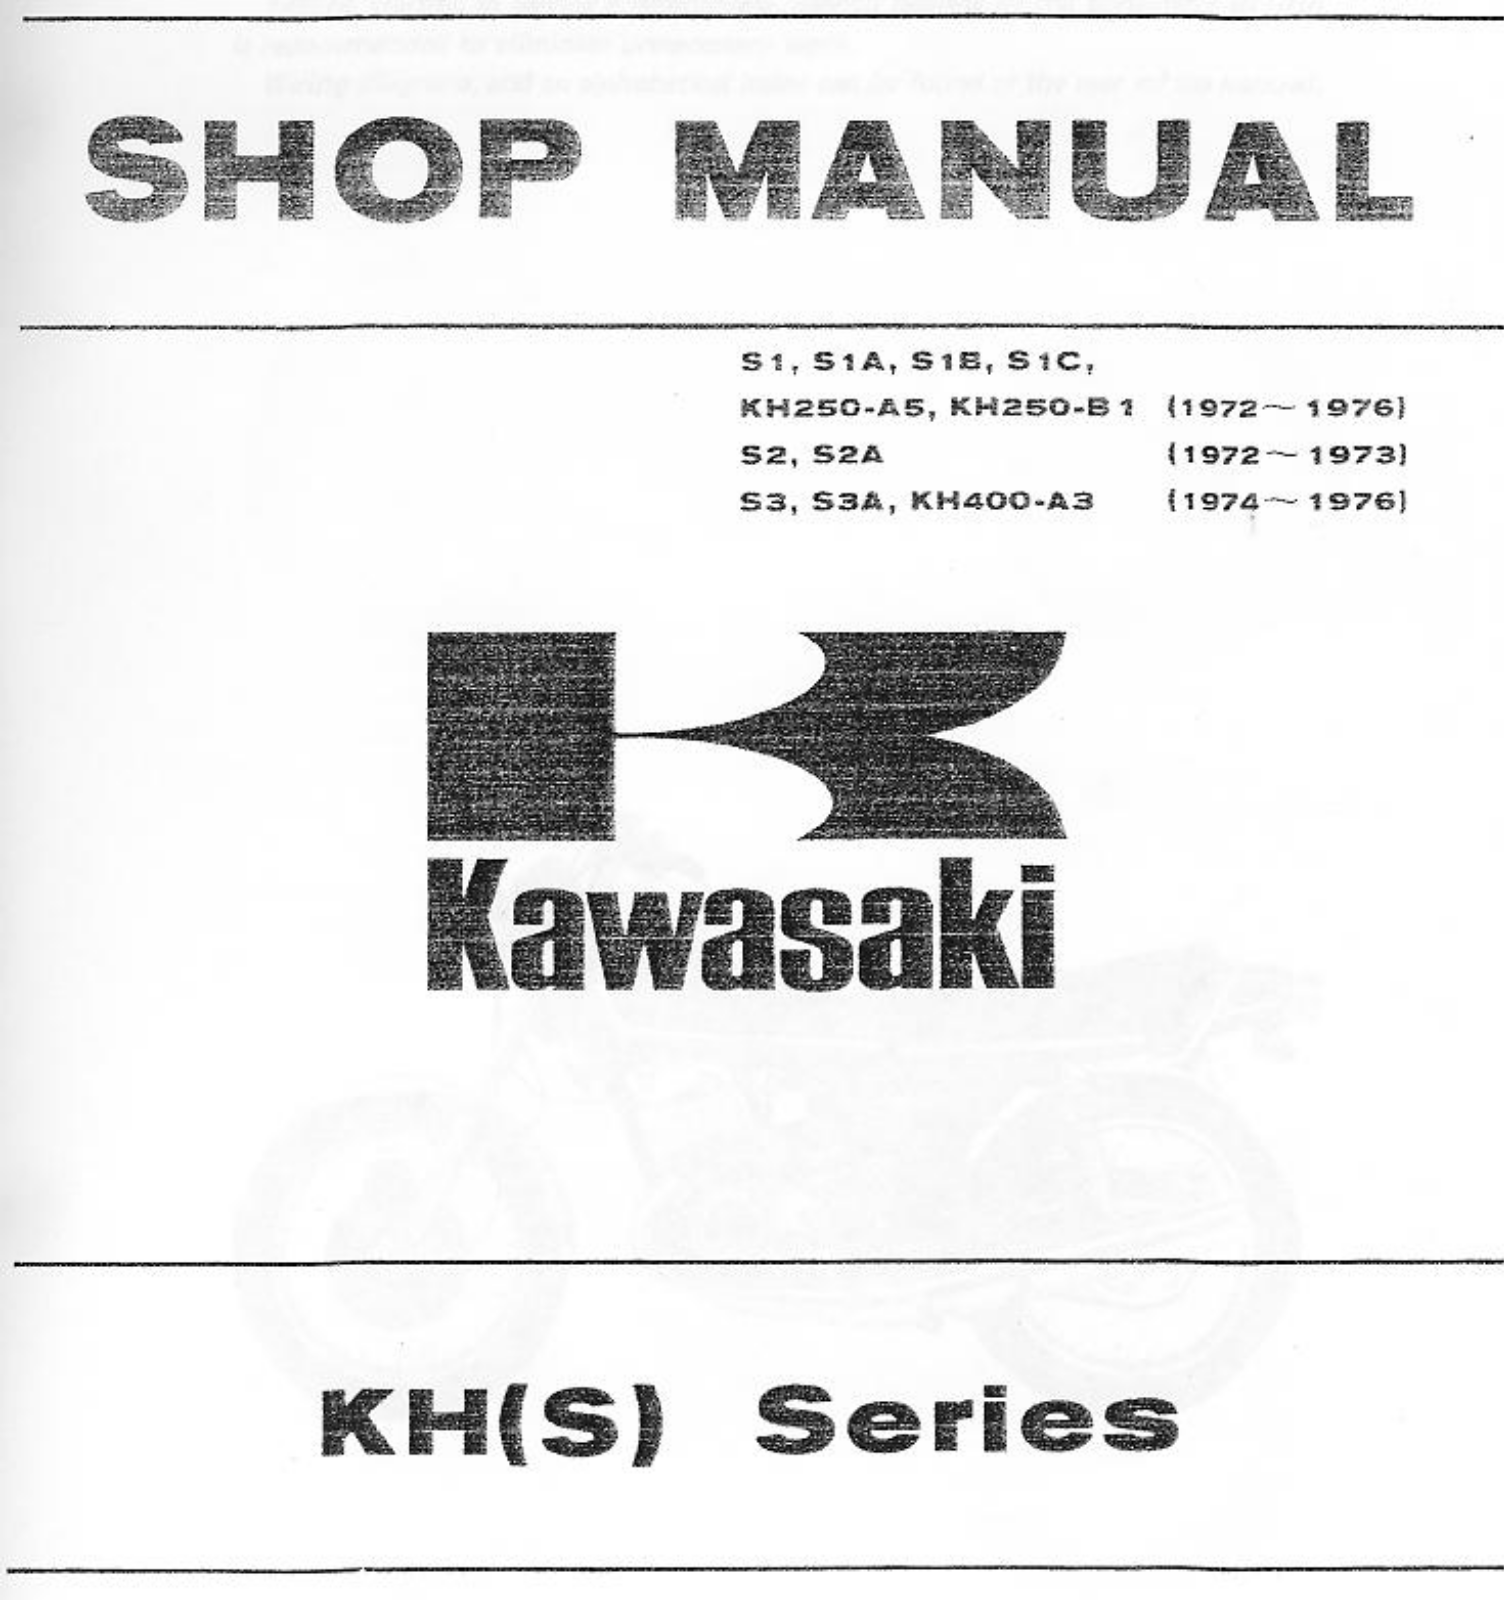 KAWASAKI S, S2, KH400, KH250 User Manual